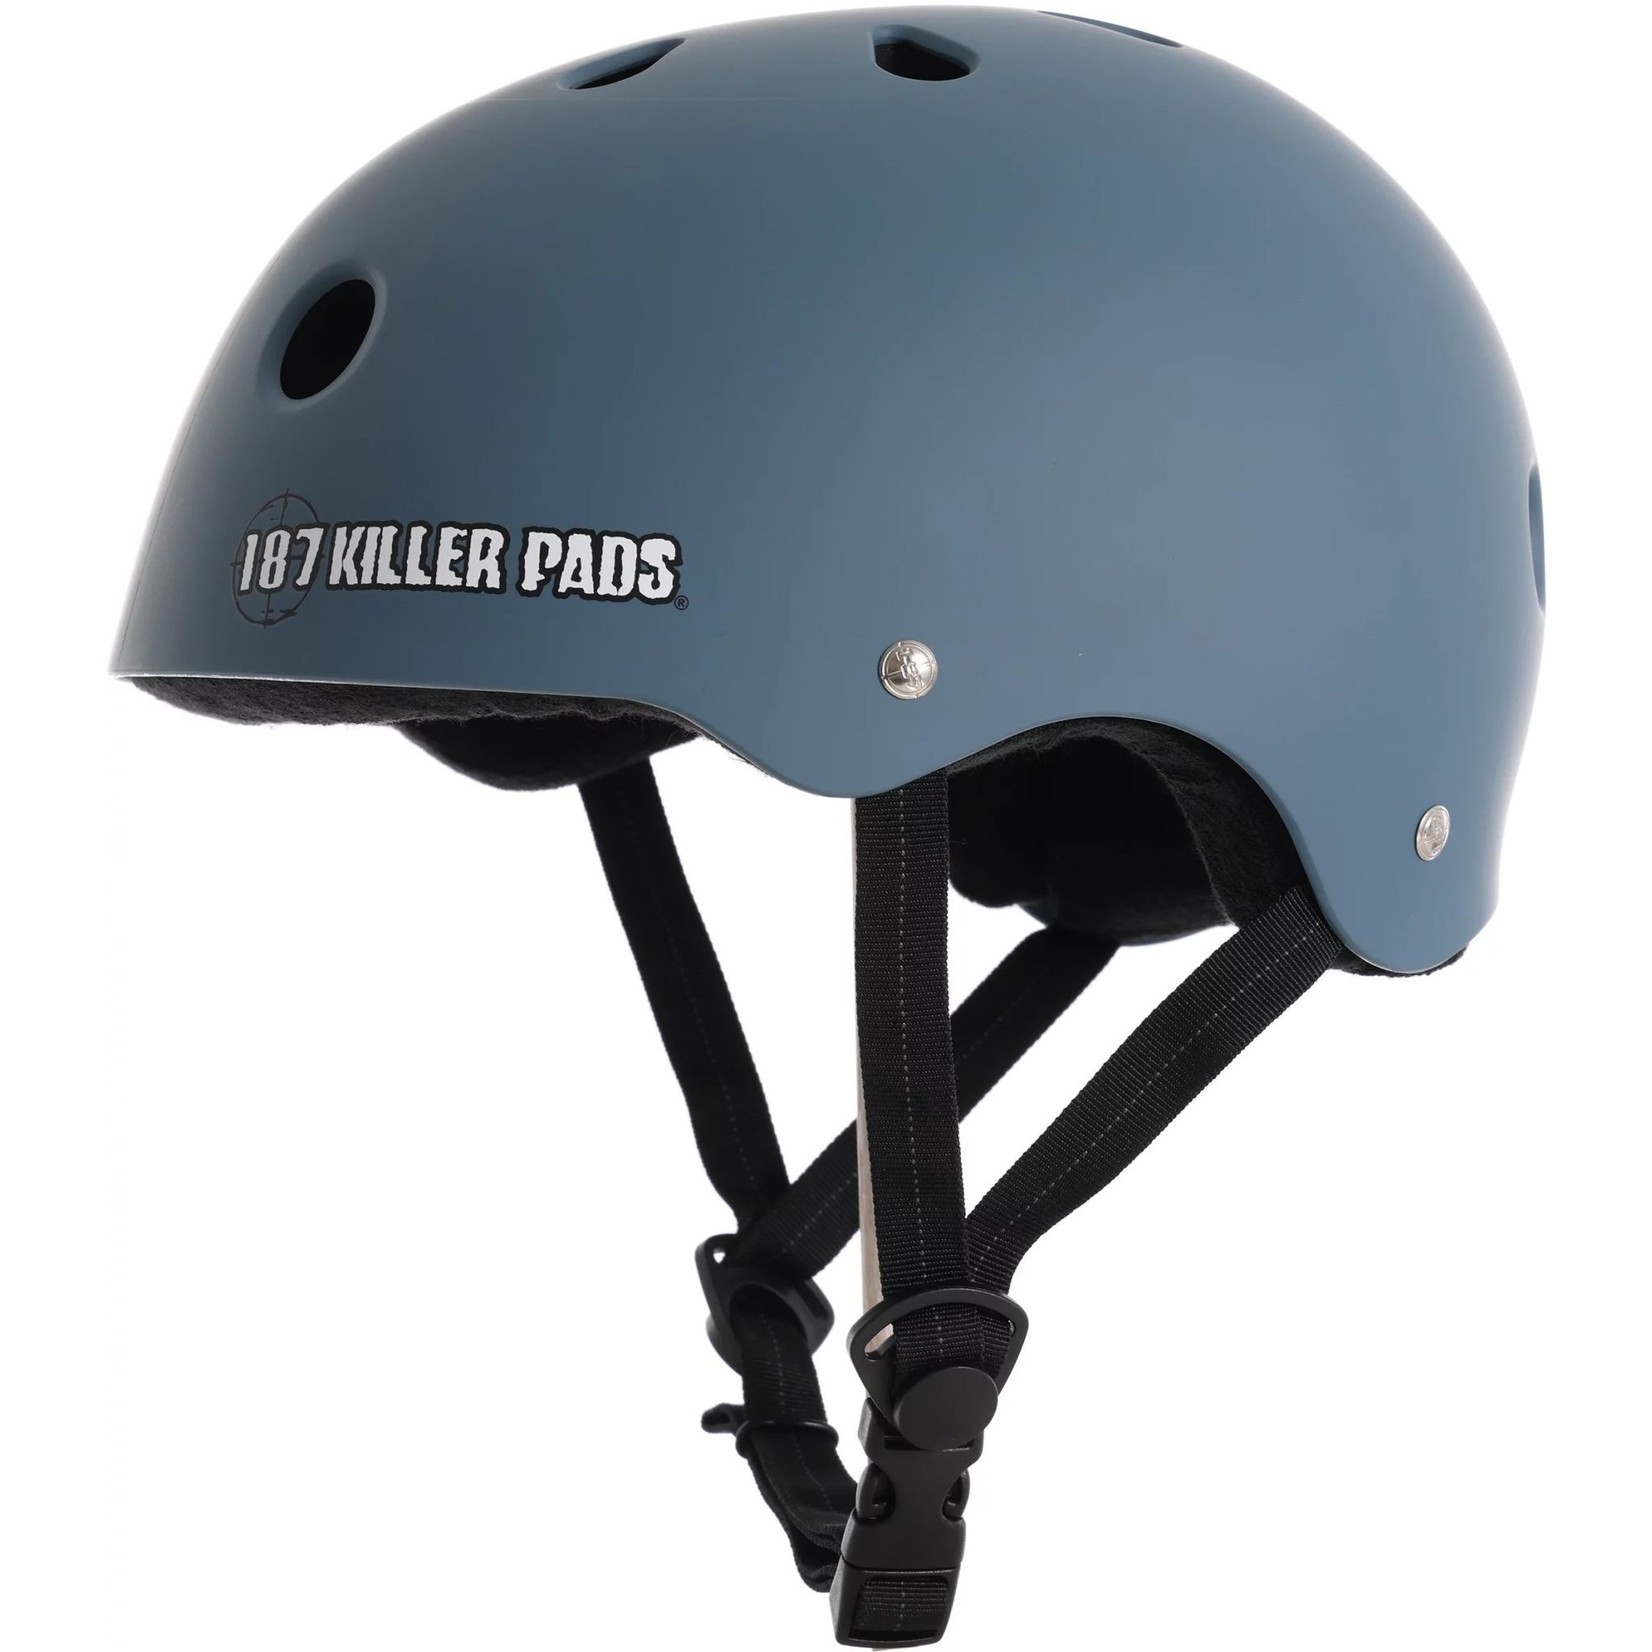 187 Killer Pads 187 Killer Pads Pro Skate Helmet Stone Blue - L